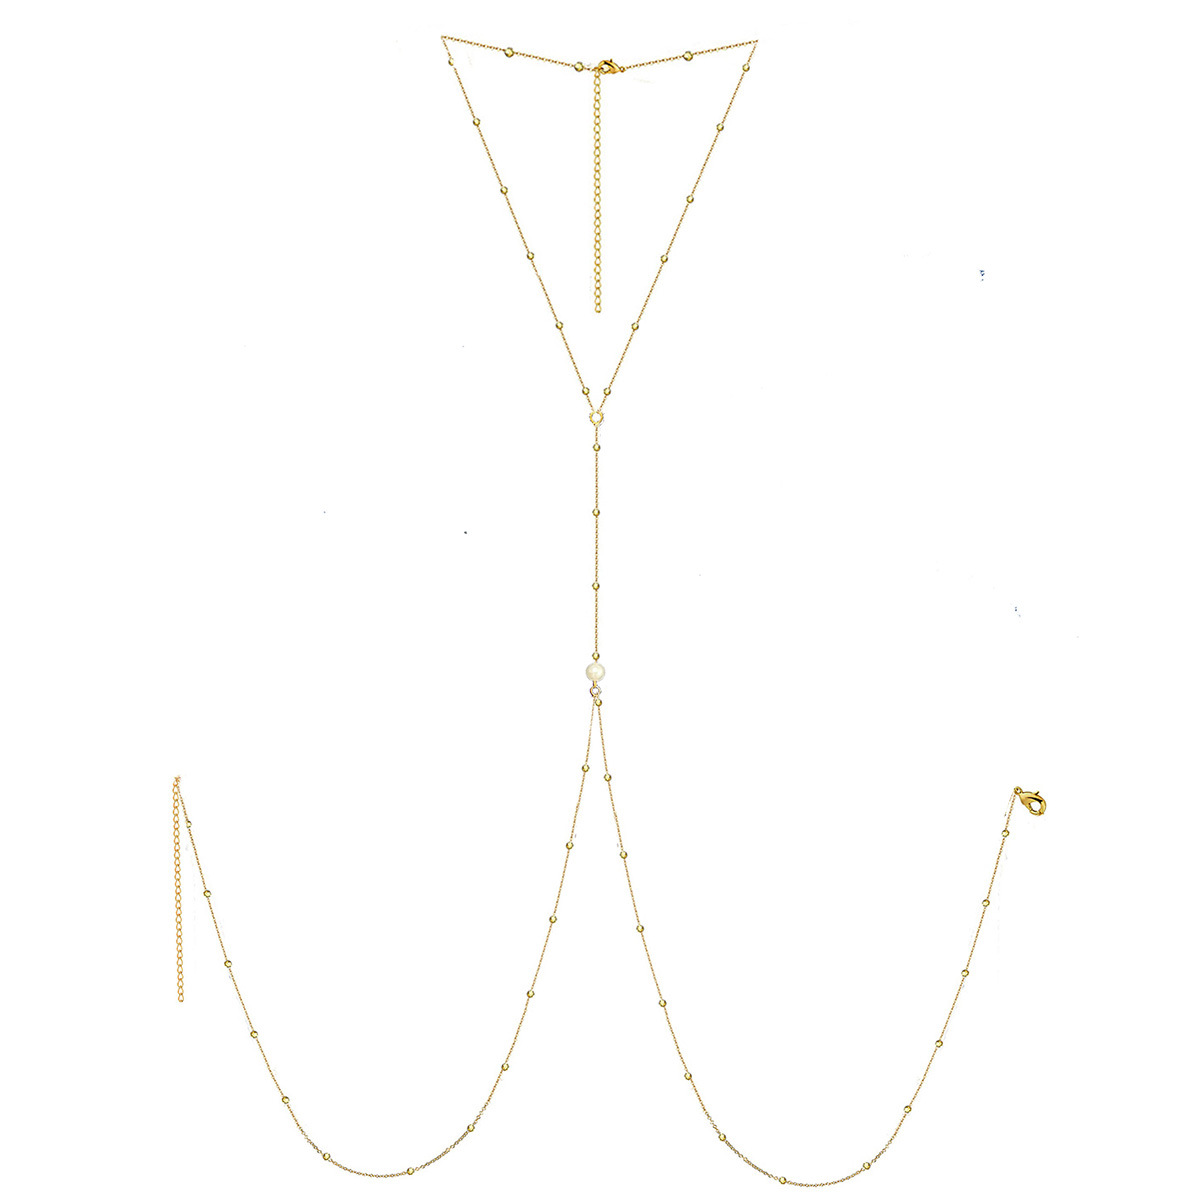 4:Bead chain gold